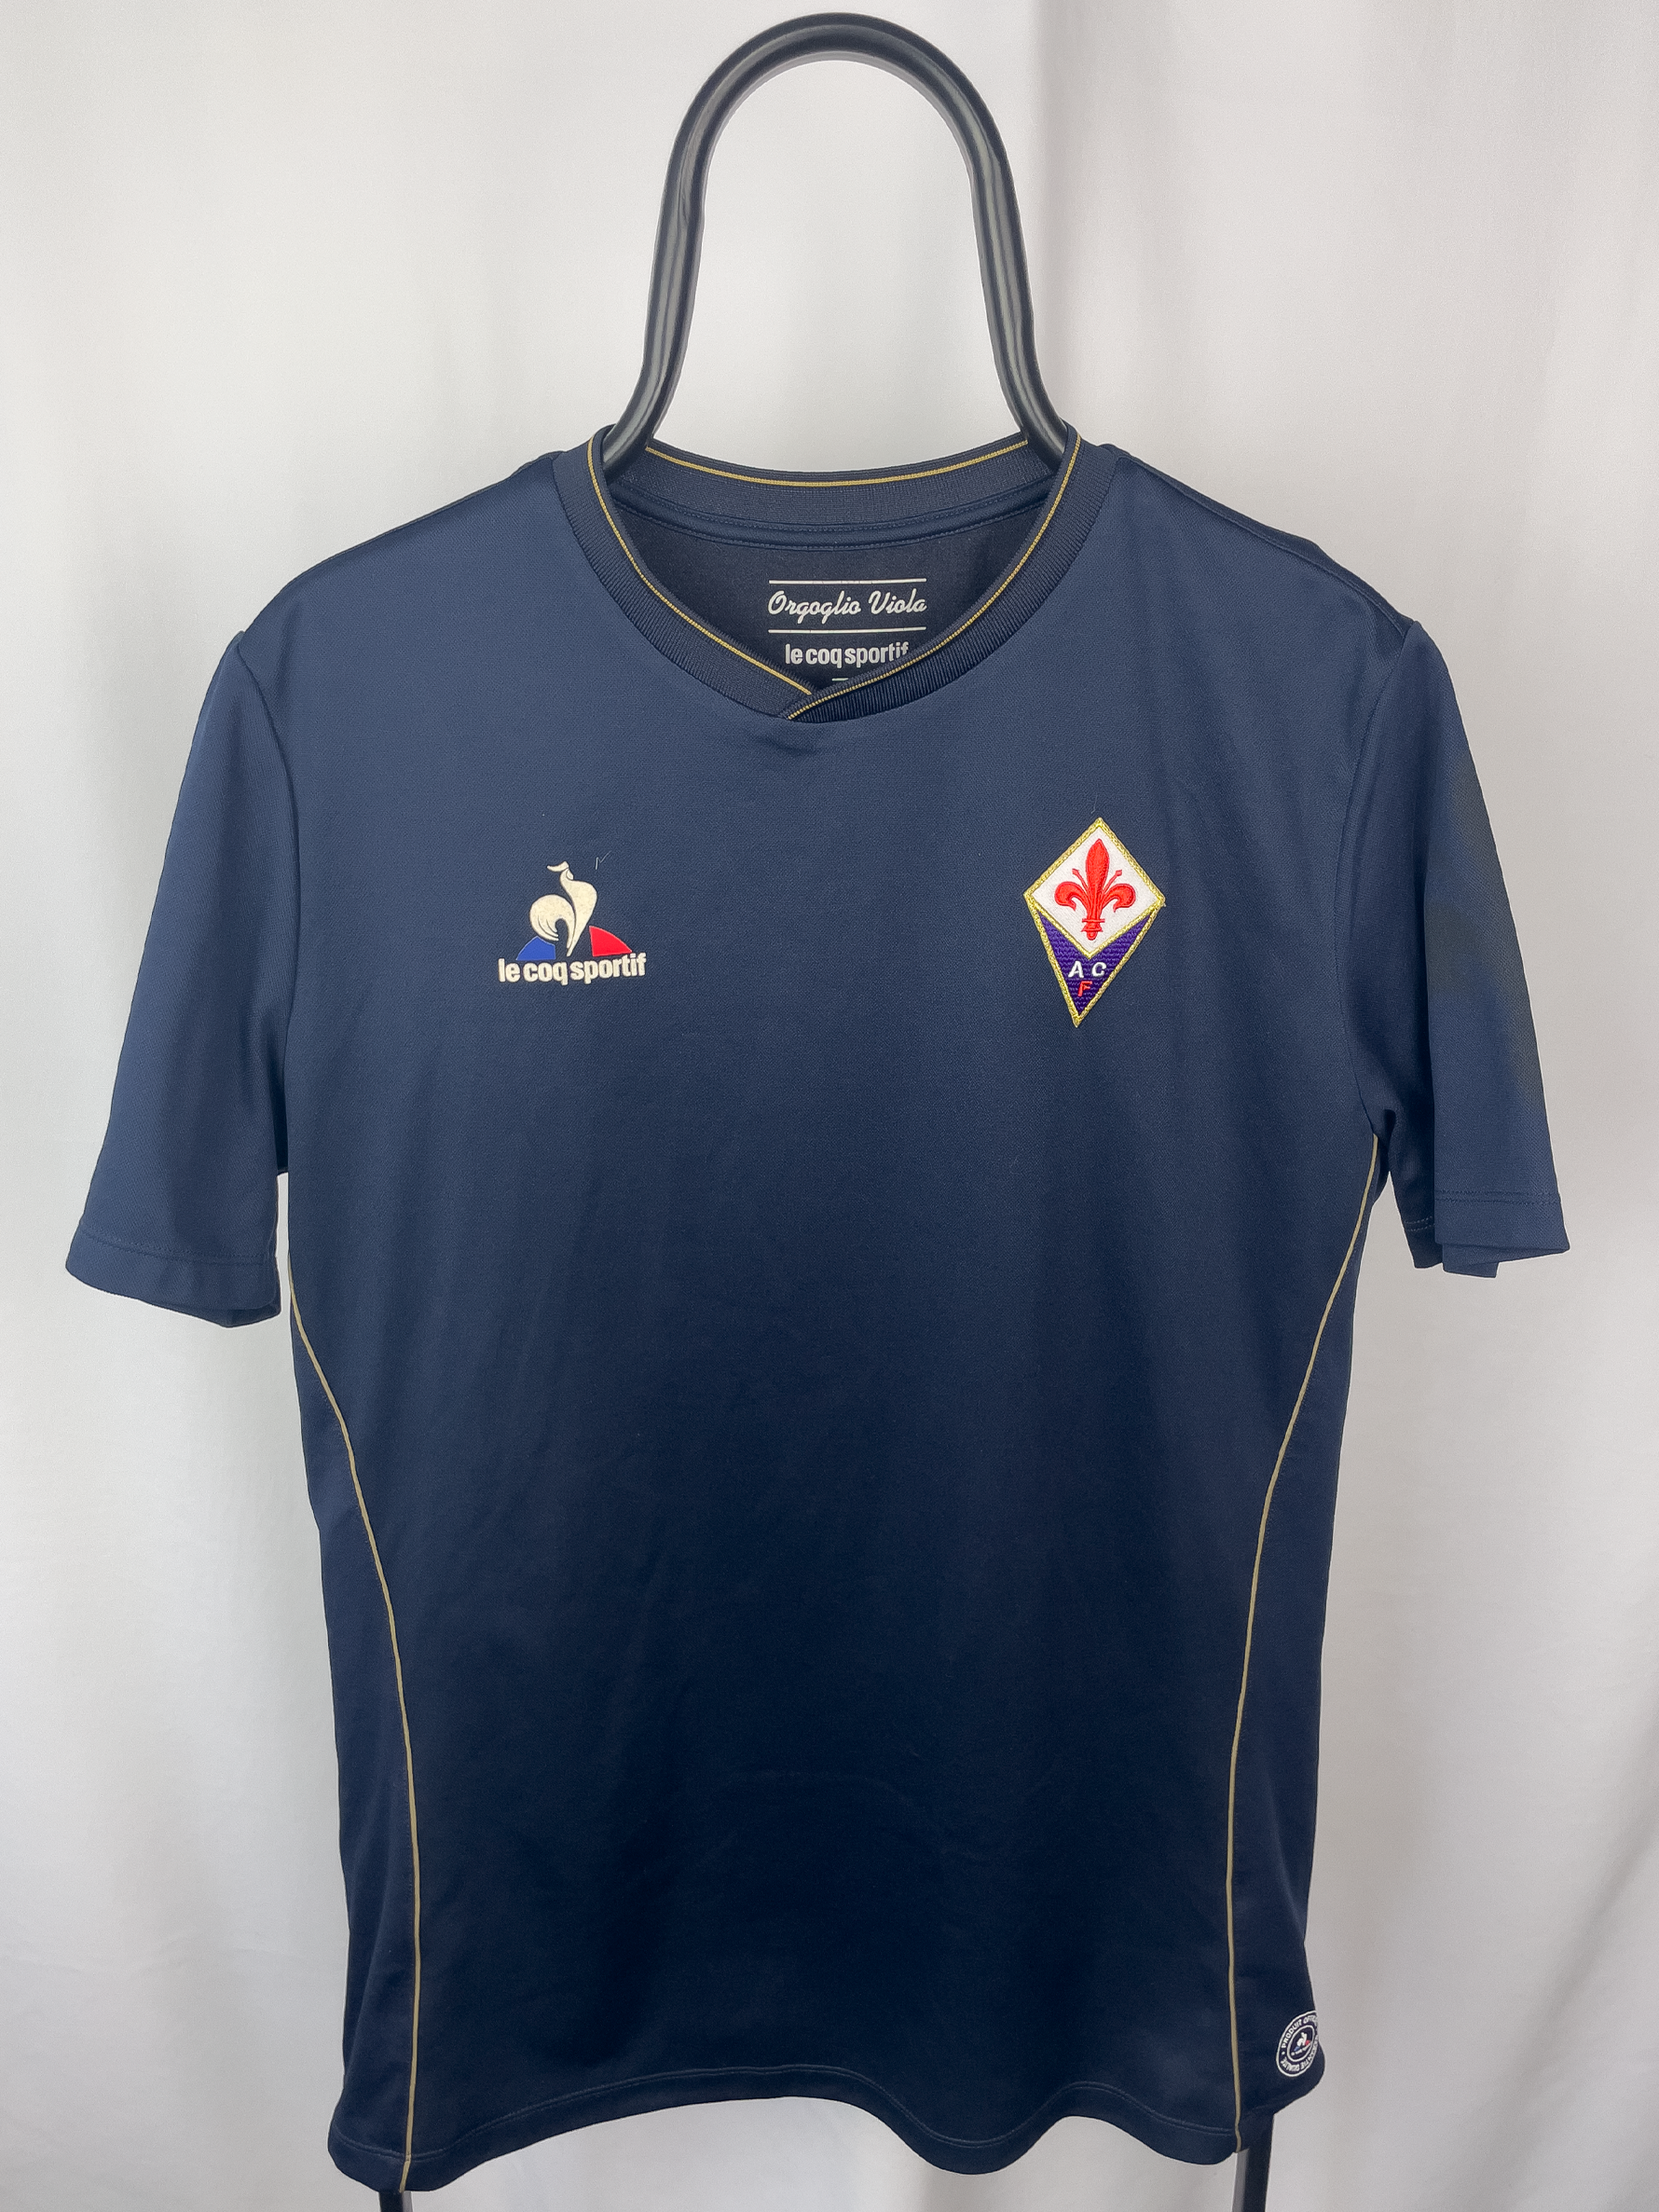 Bernardeschi Fiorentina 15/16 3. trøje - L